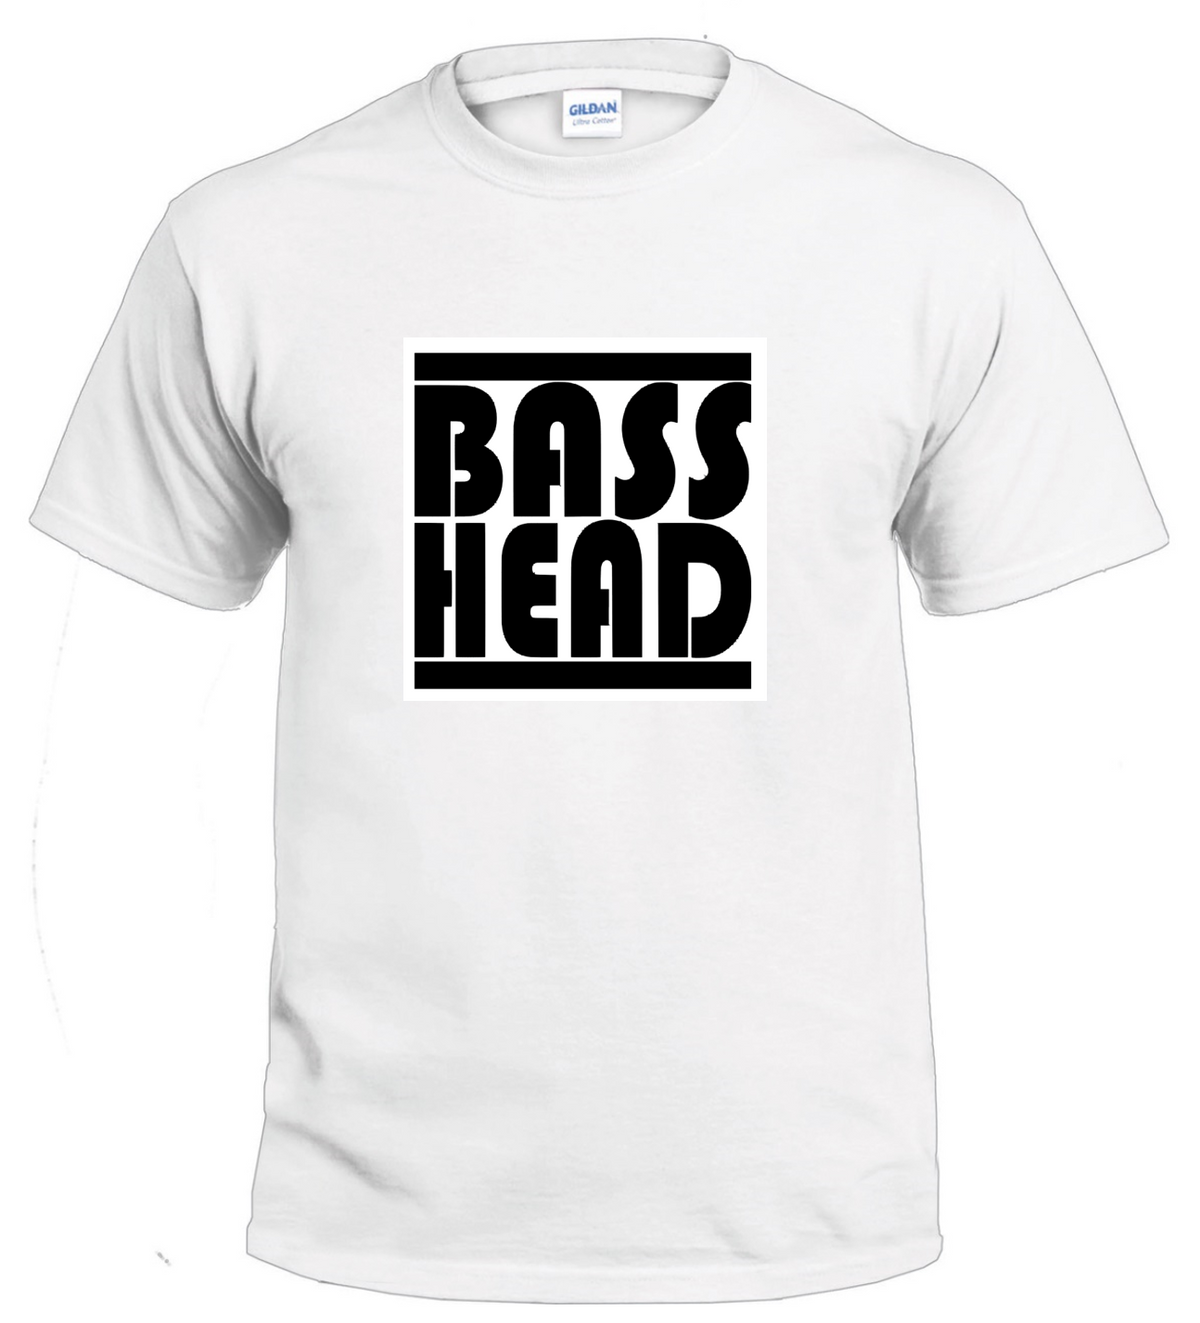 Bass Head Basshead tshirt